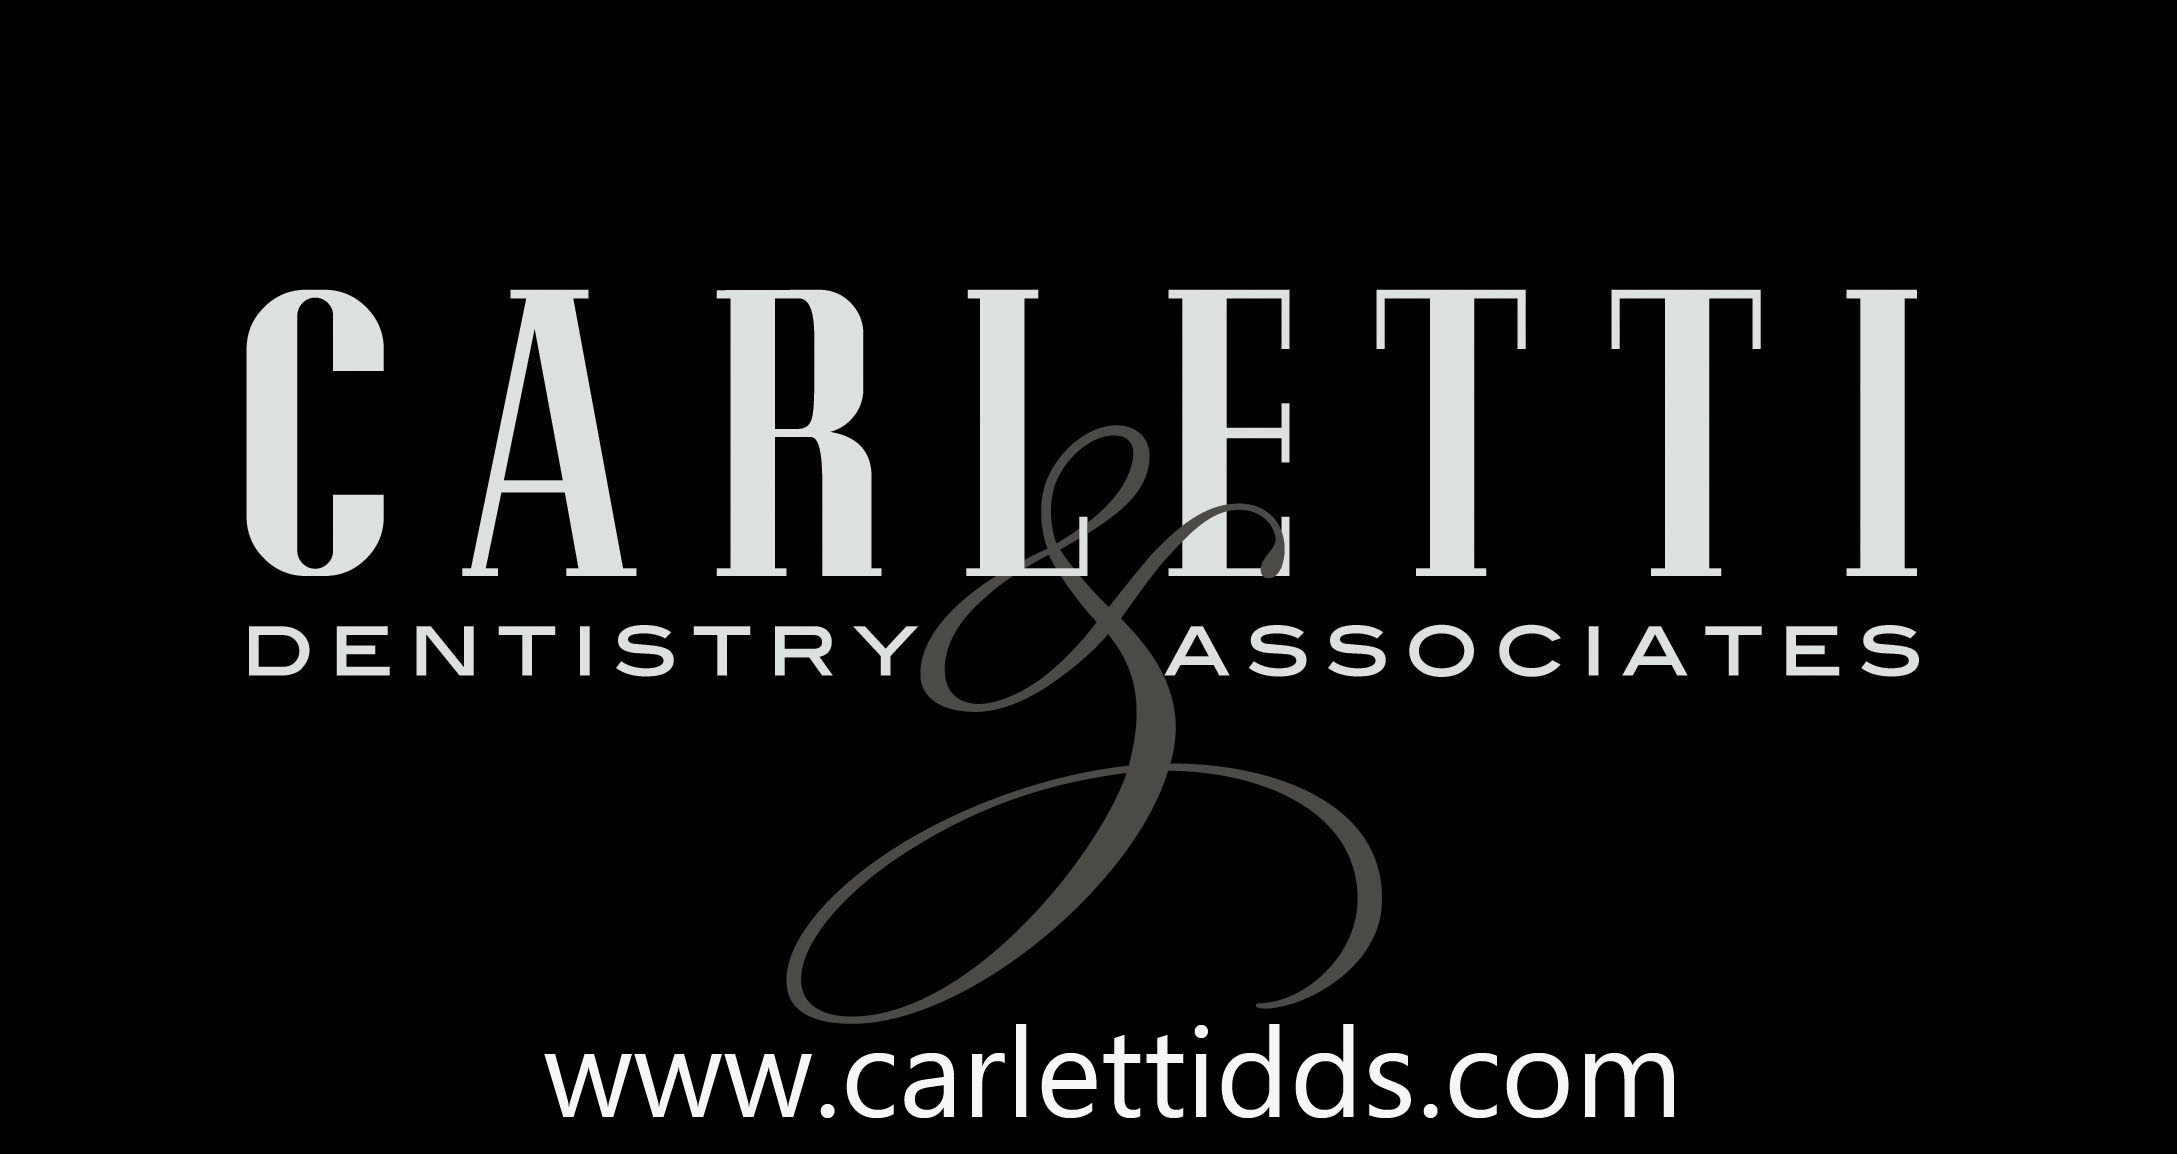 Carletti Dentistry